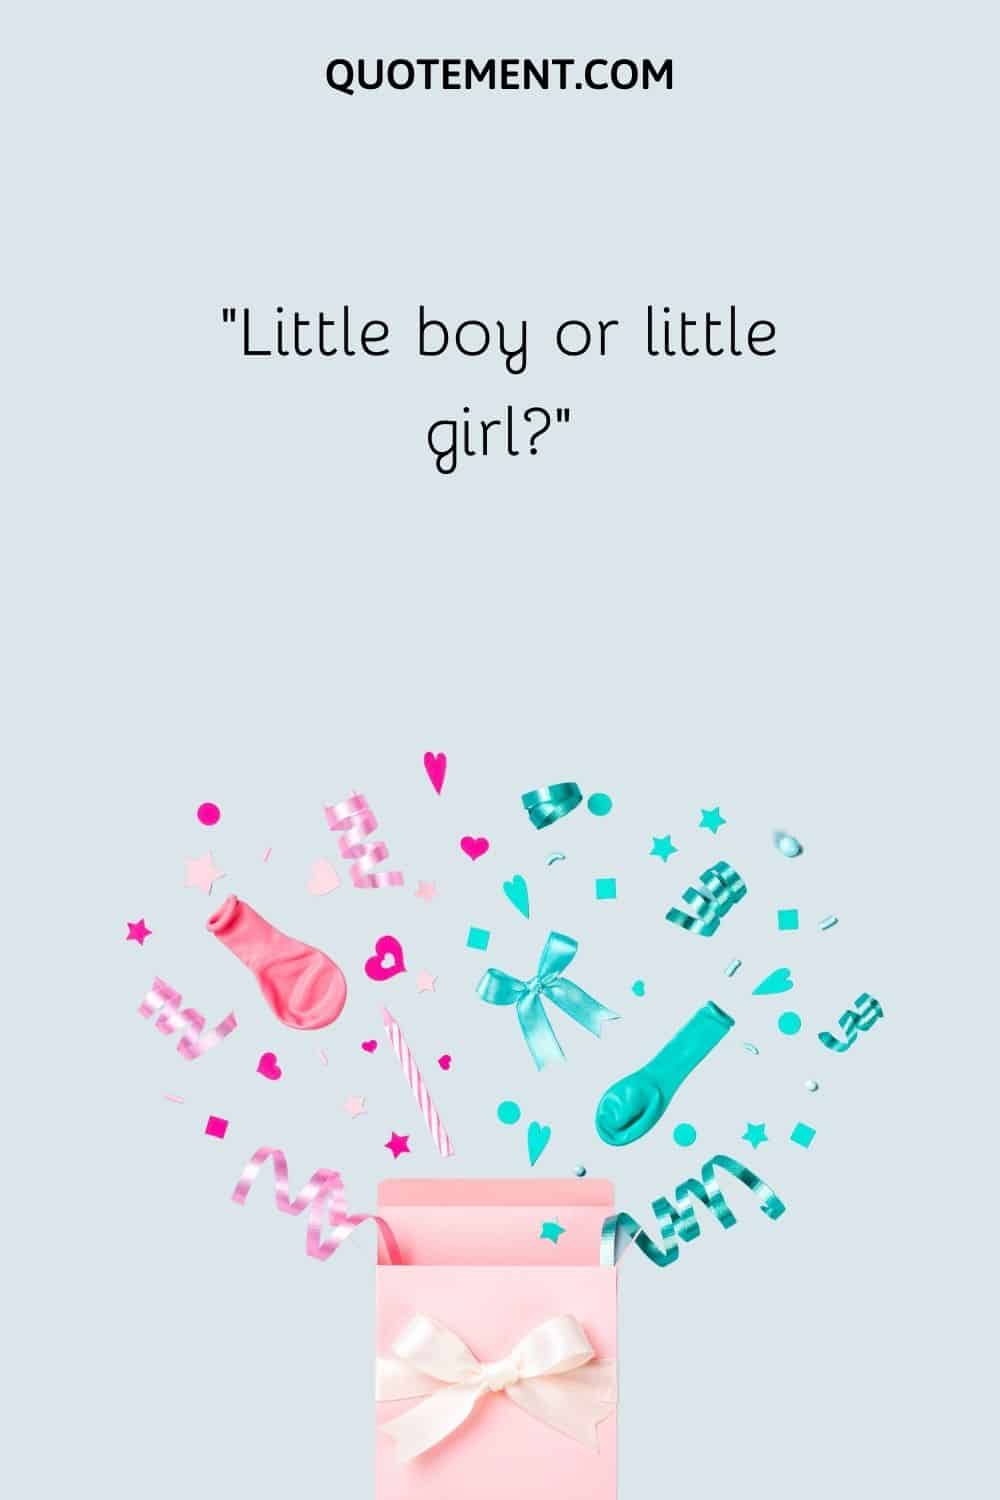 Little boy or little girl